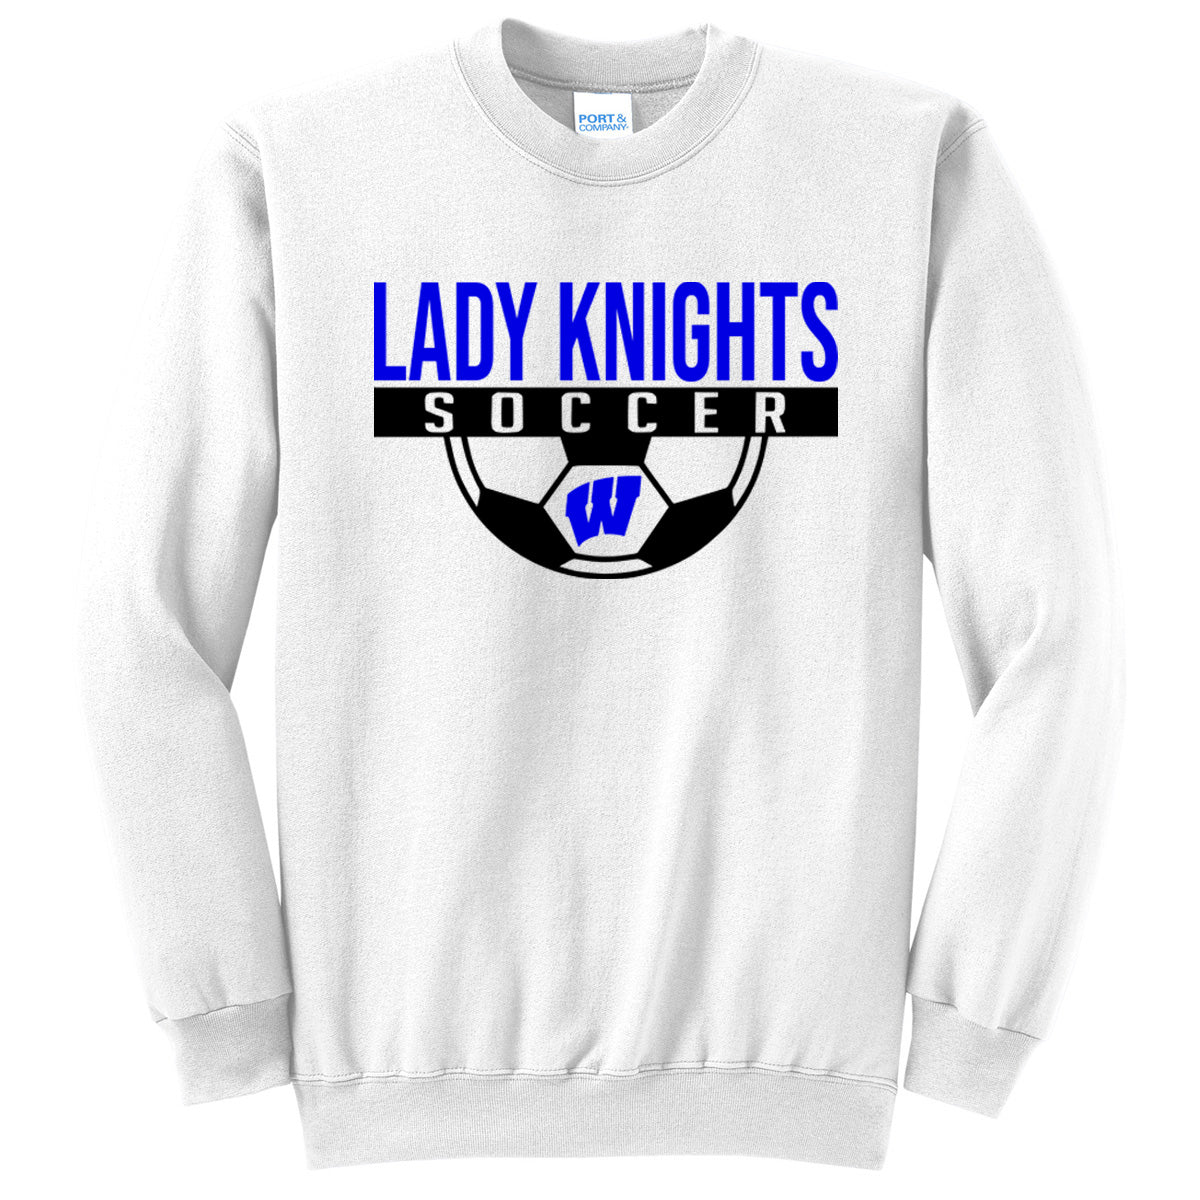 Windsor - Lady Knights Soccer (Half Ball) - White (Tee/DriFit/Hoodie/Sweatshirt) - Southern Grace Creations